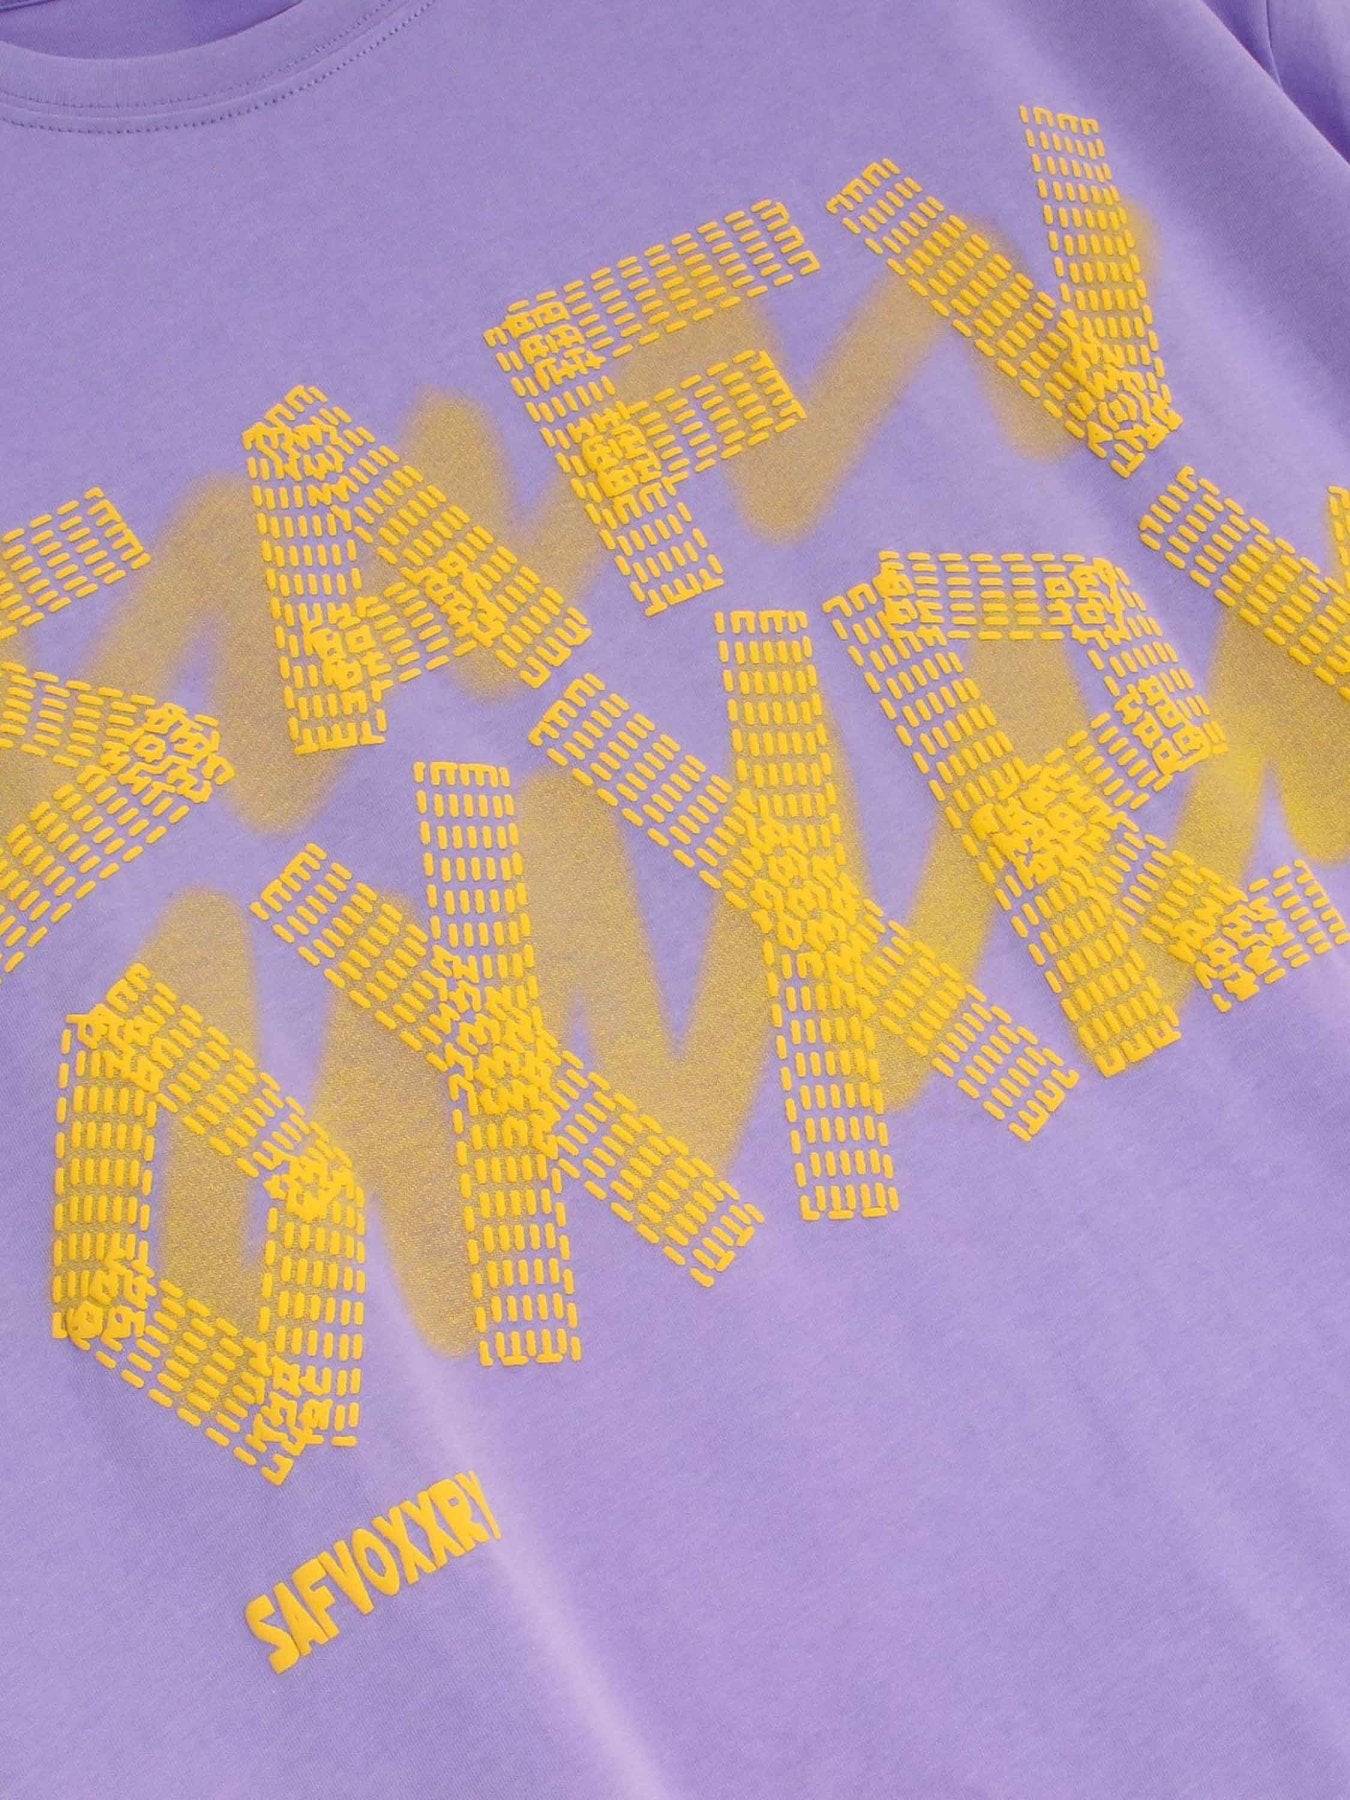 The Supermade Creative Alphabet Printed T-Shirt